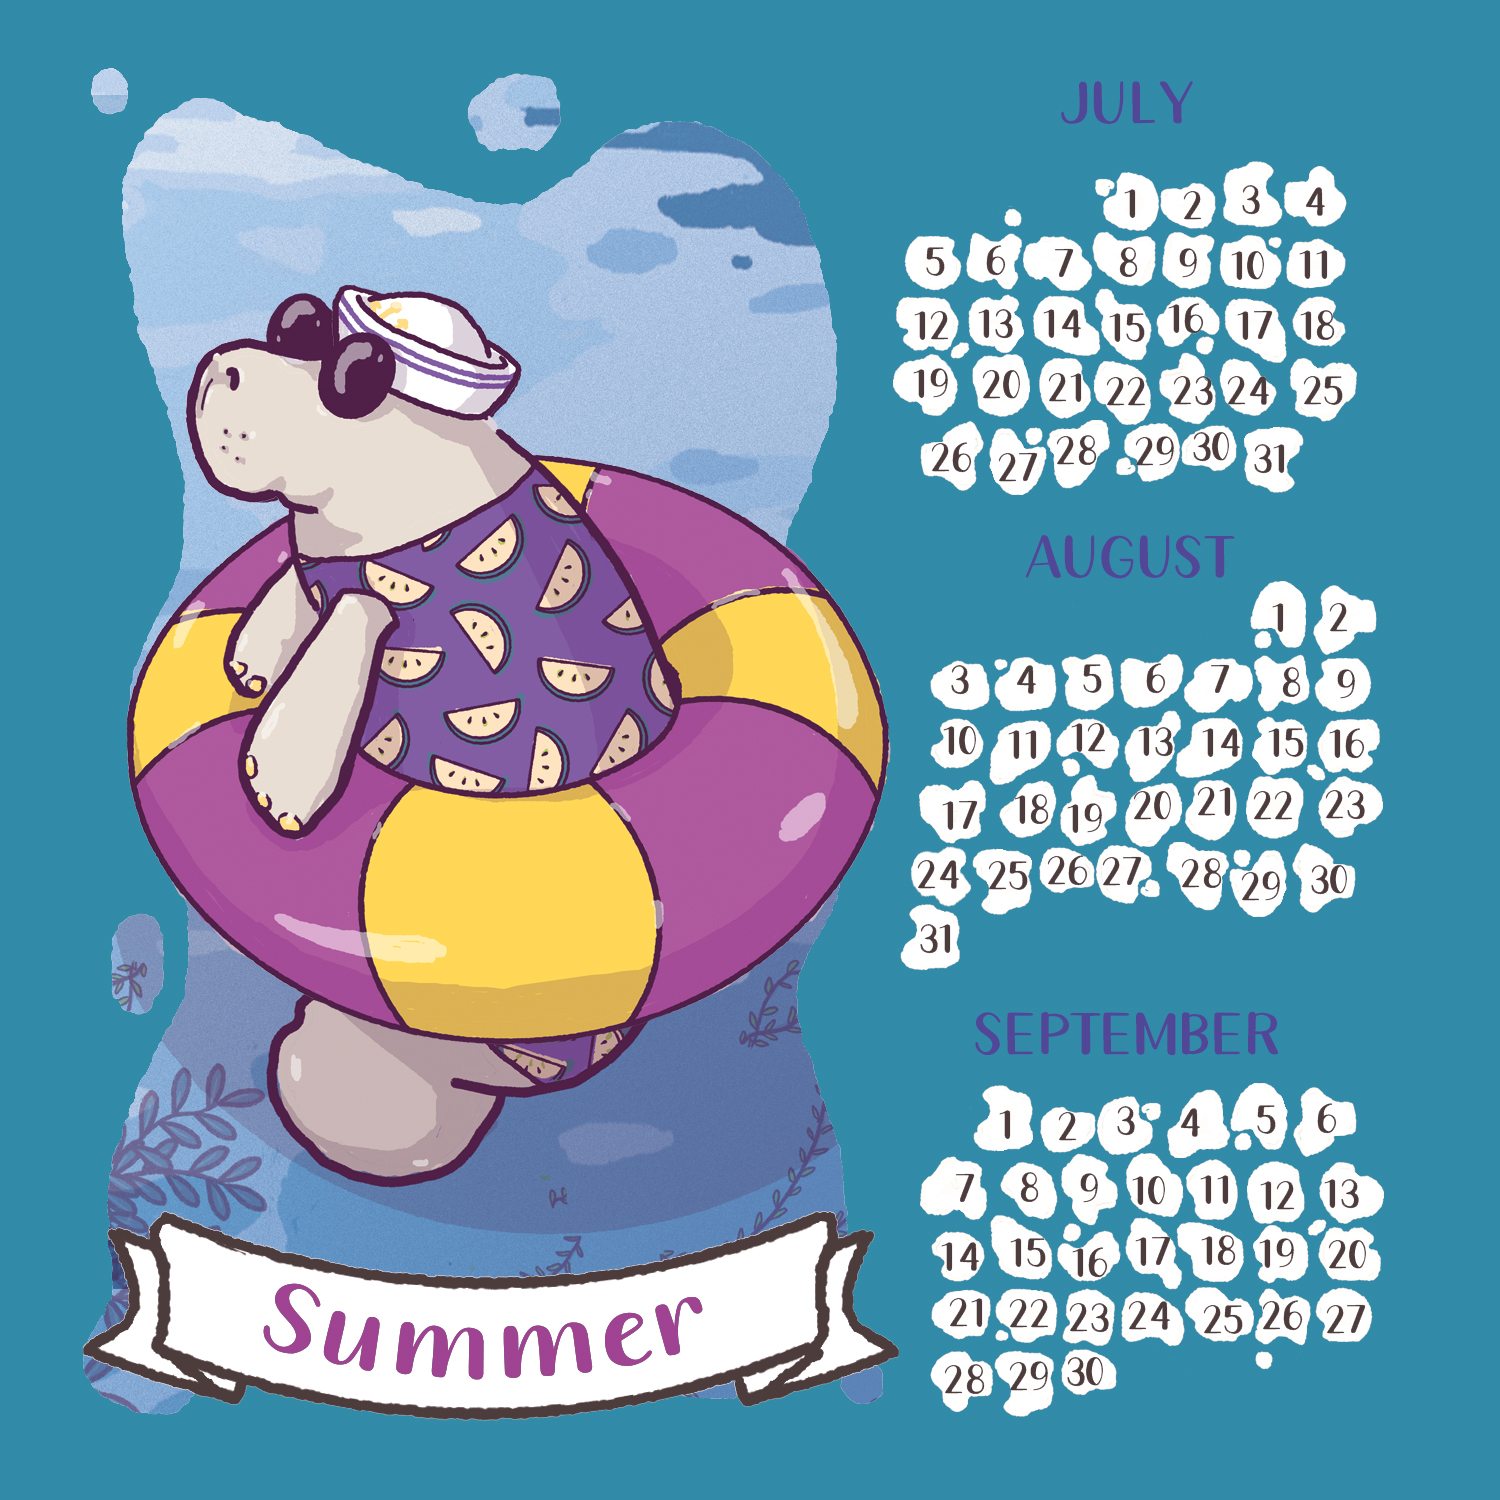 tostoini-lamentino-manatee-summer-calendar-2020